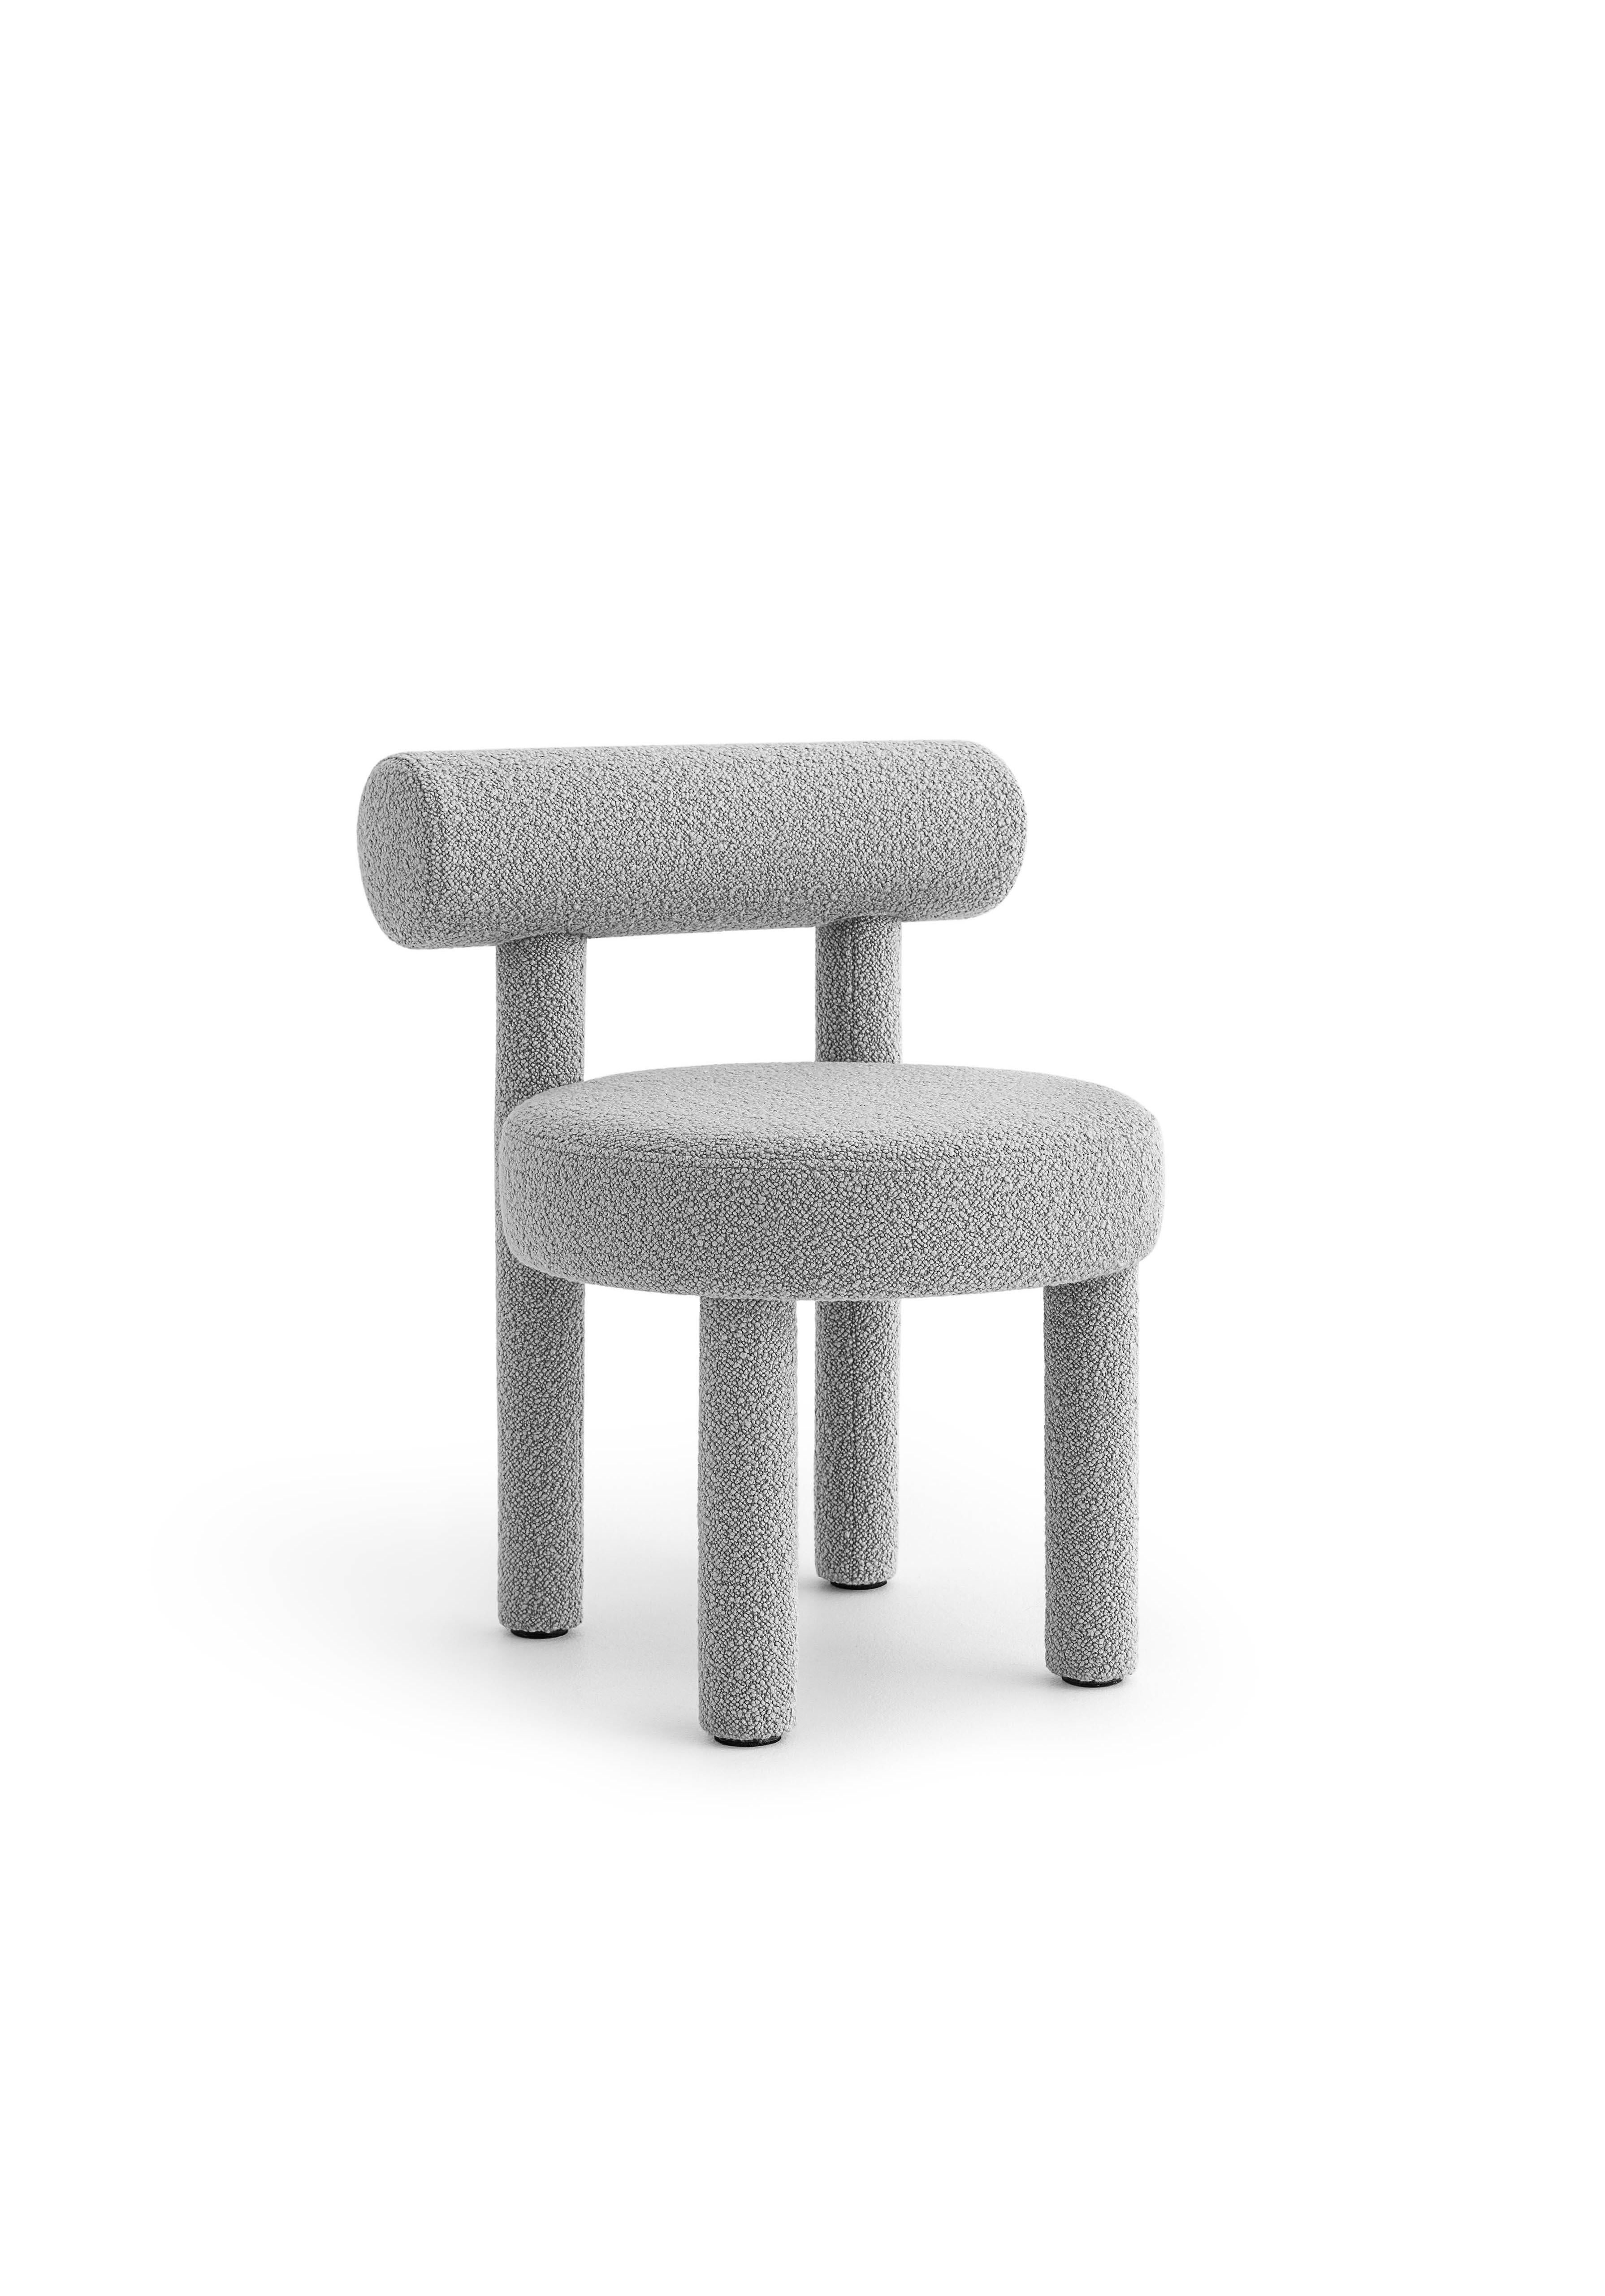 Chair Gropius CS1
Designer: Kateryna Sokolova for Noom

Model in the main picture: Dedar, Karakorum col.004

Dimensions:
Height: 74 cm / 29,13 in
Width: 57 cm / 22,44 in
Depth: 57 cm / 22,44 in
Seat height: 47 cm / 18,11 in

New NOOM furniture